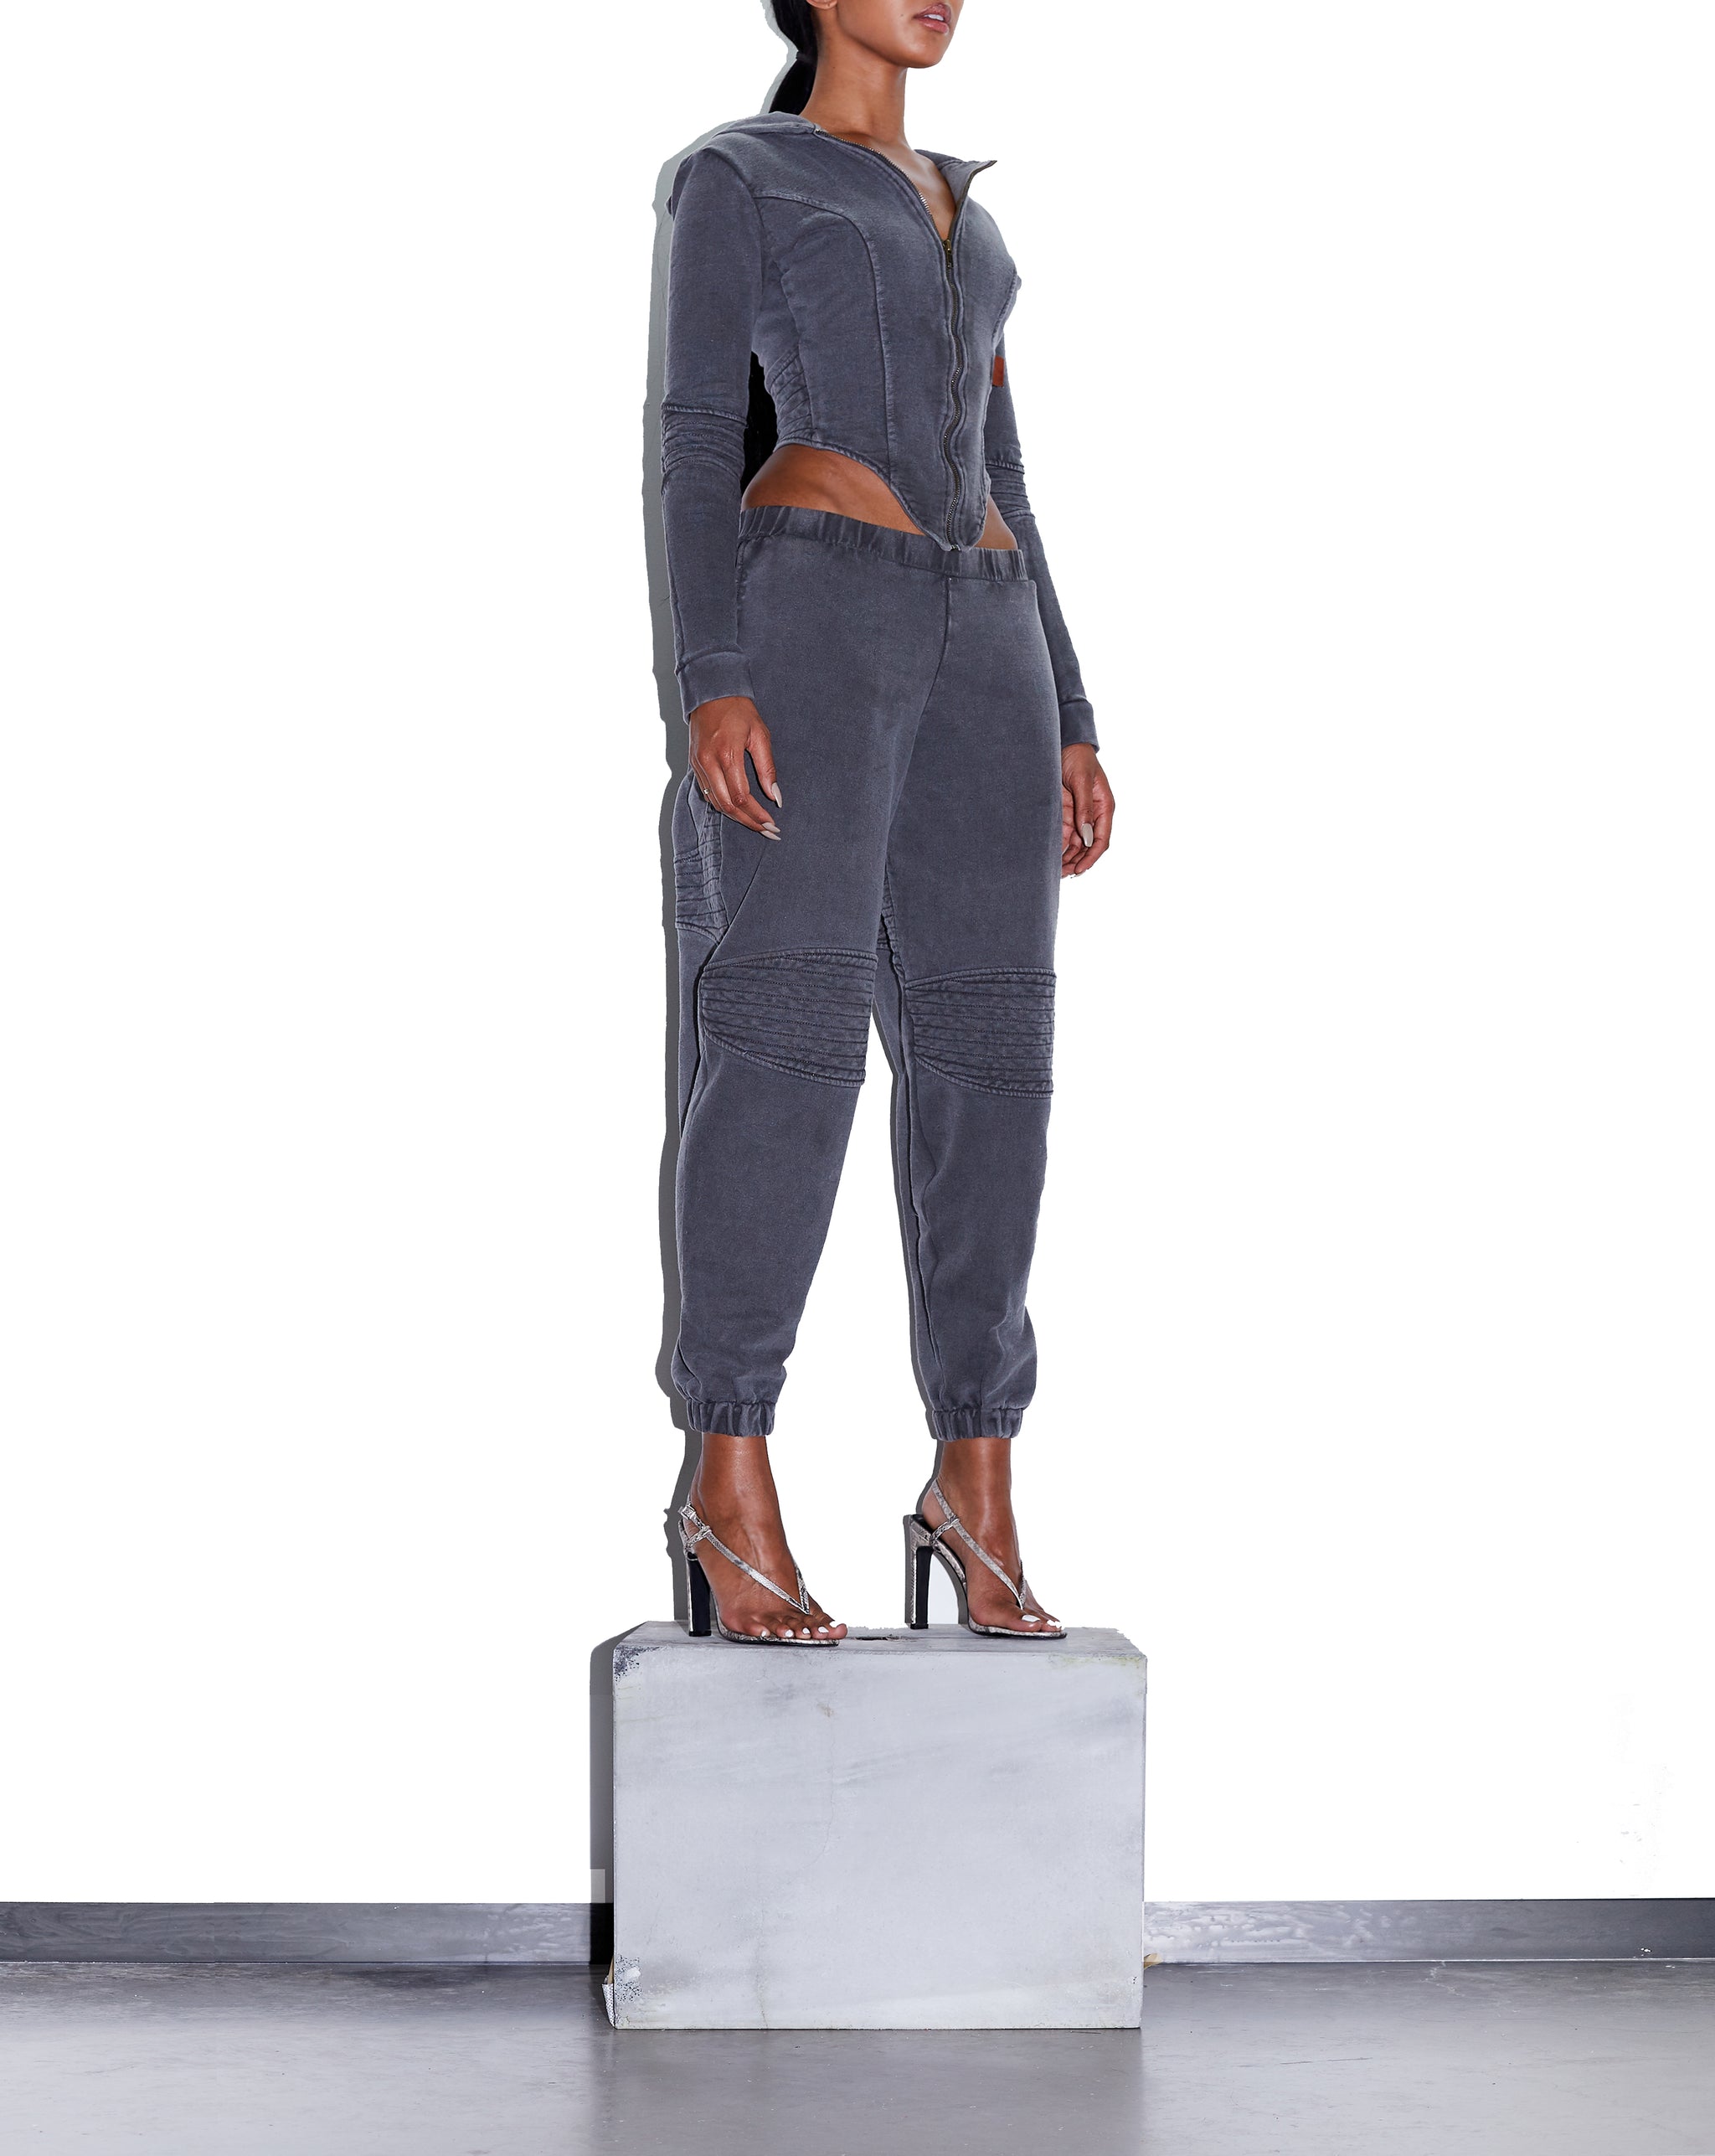 Joggers in Granite by The K Label, Fashion, Sweatpants, Cosy, Designer